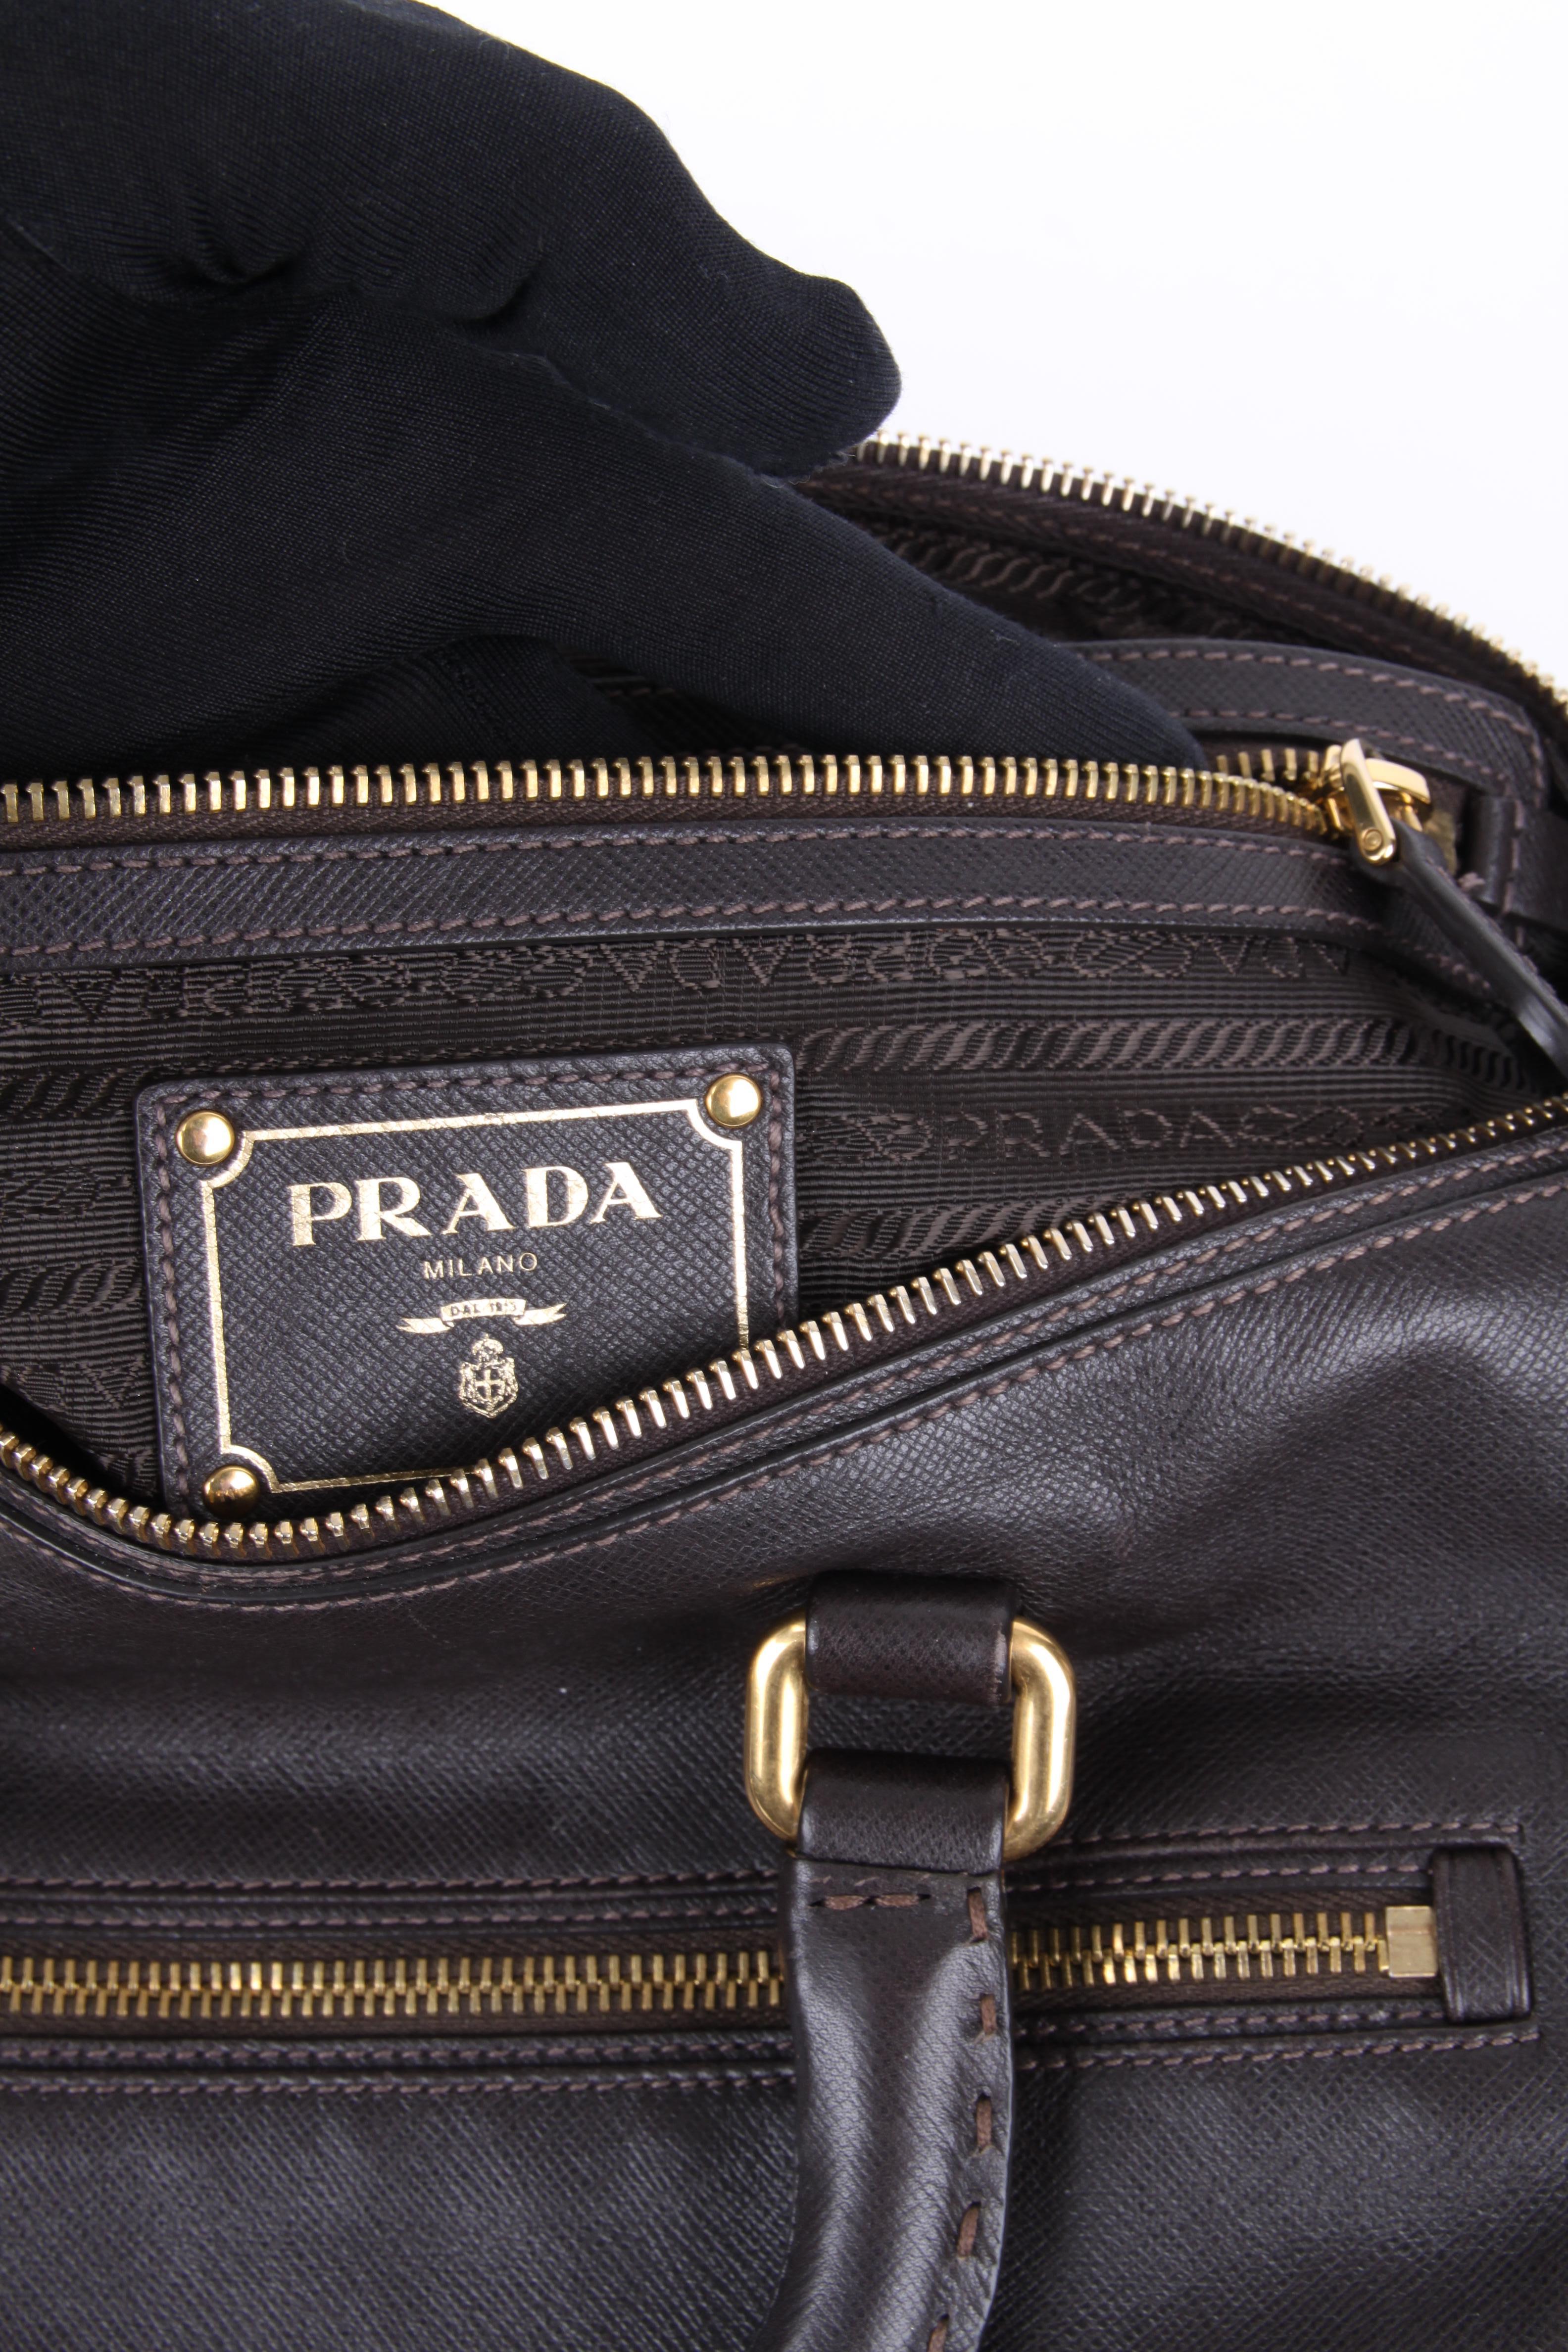 Prada Brown Leather Green Canvas Handbag For Sale 2